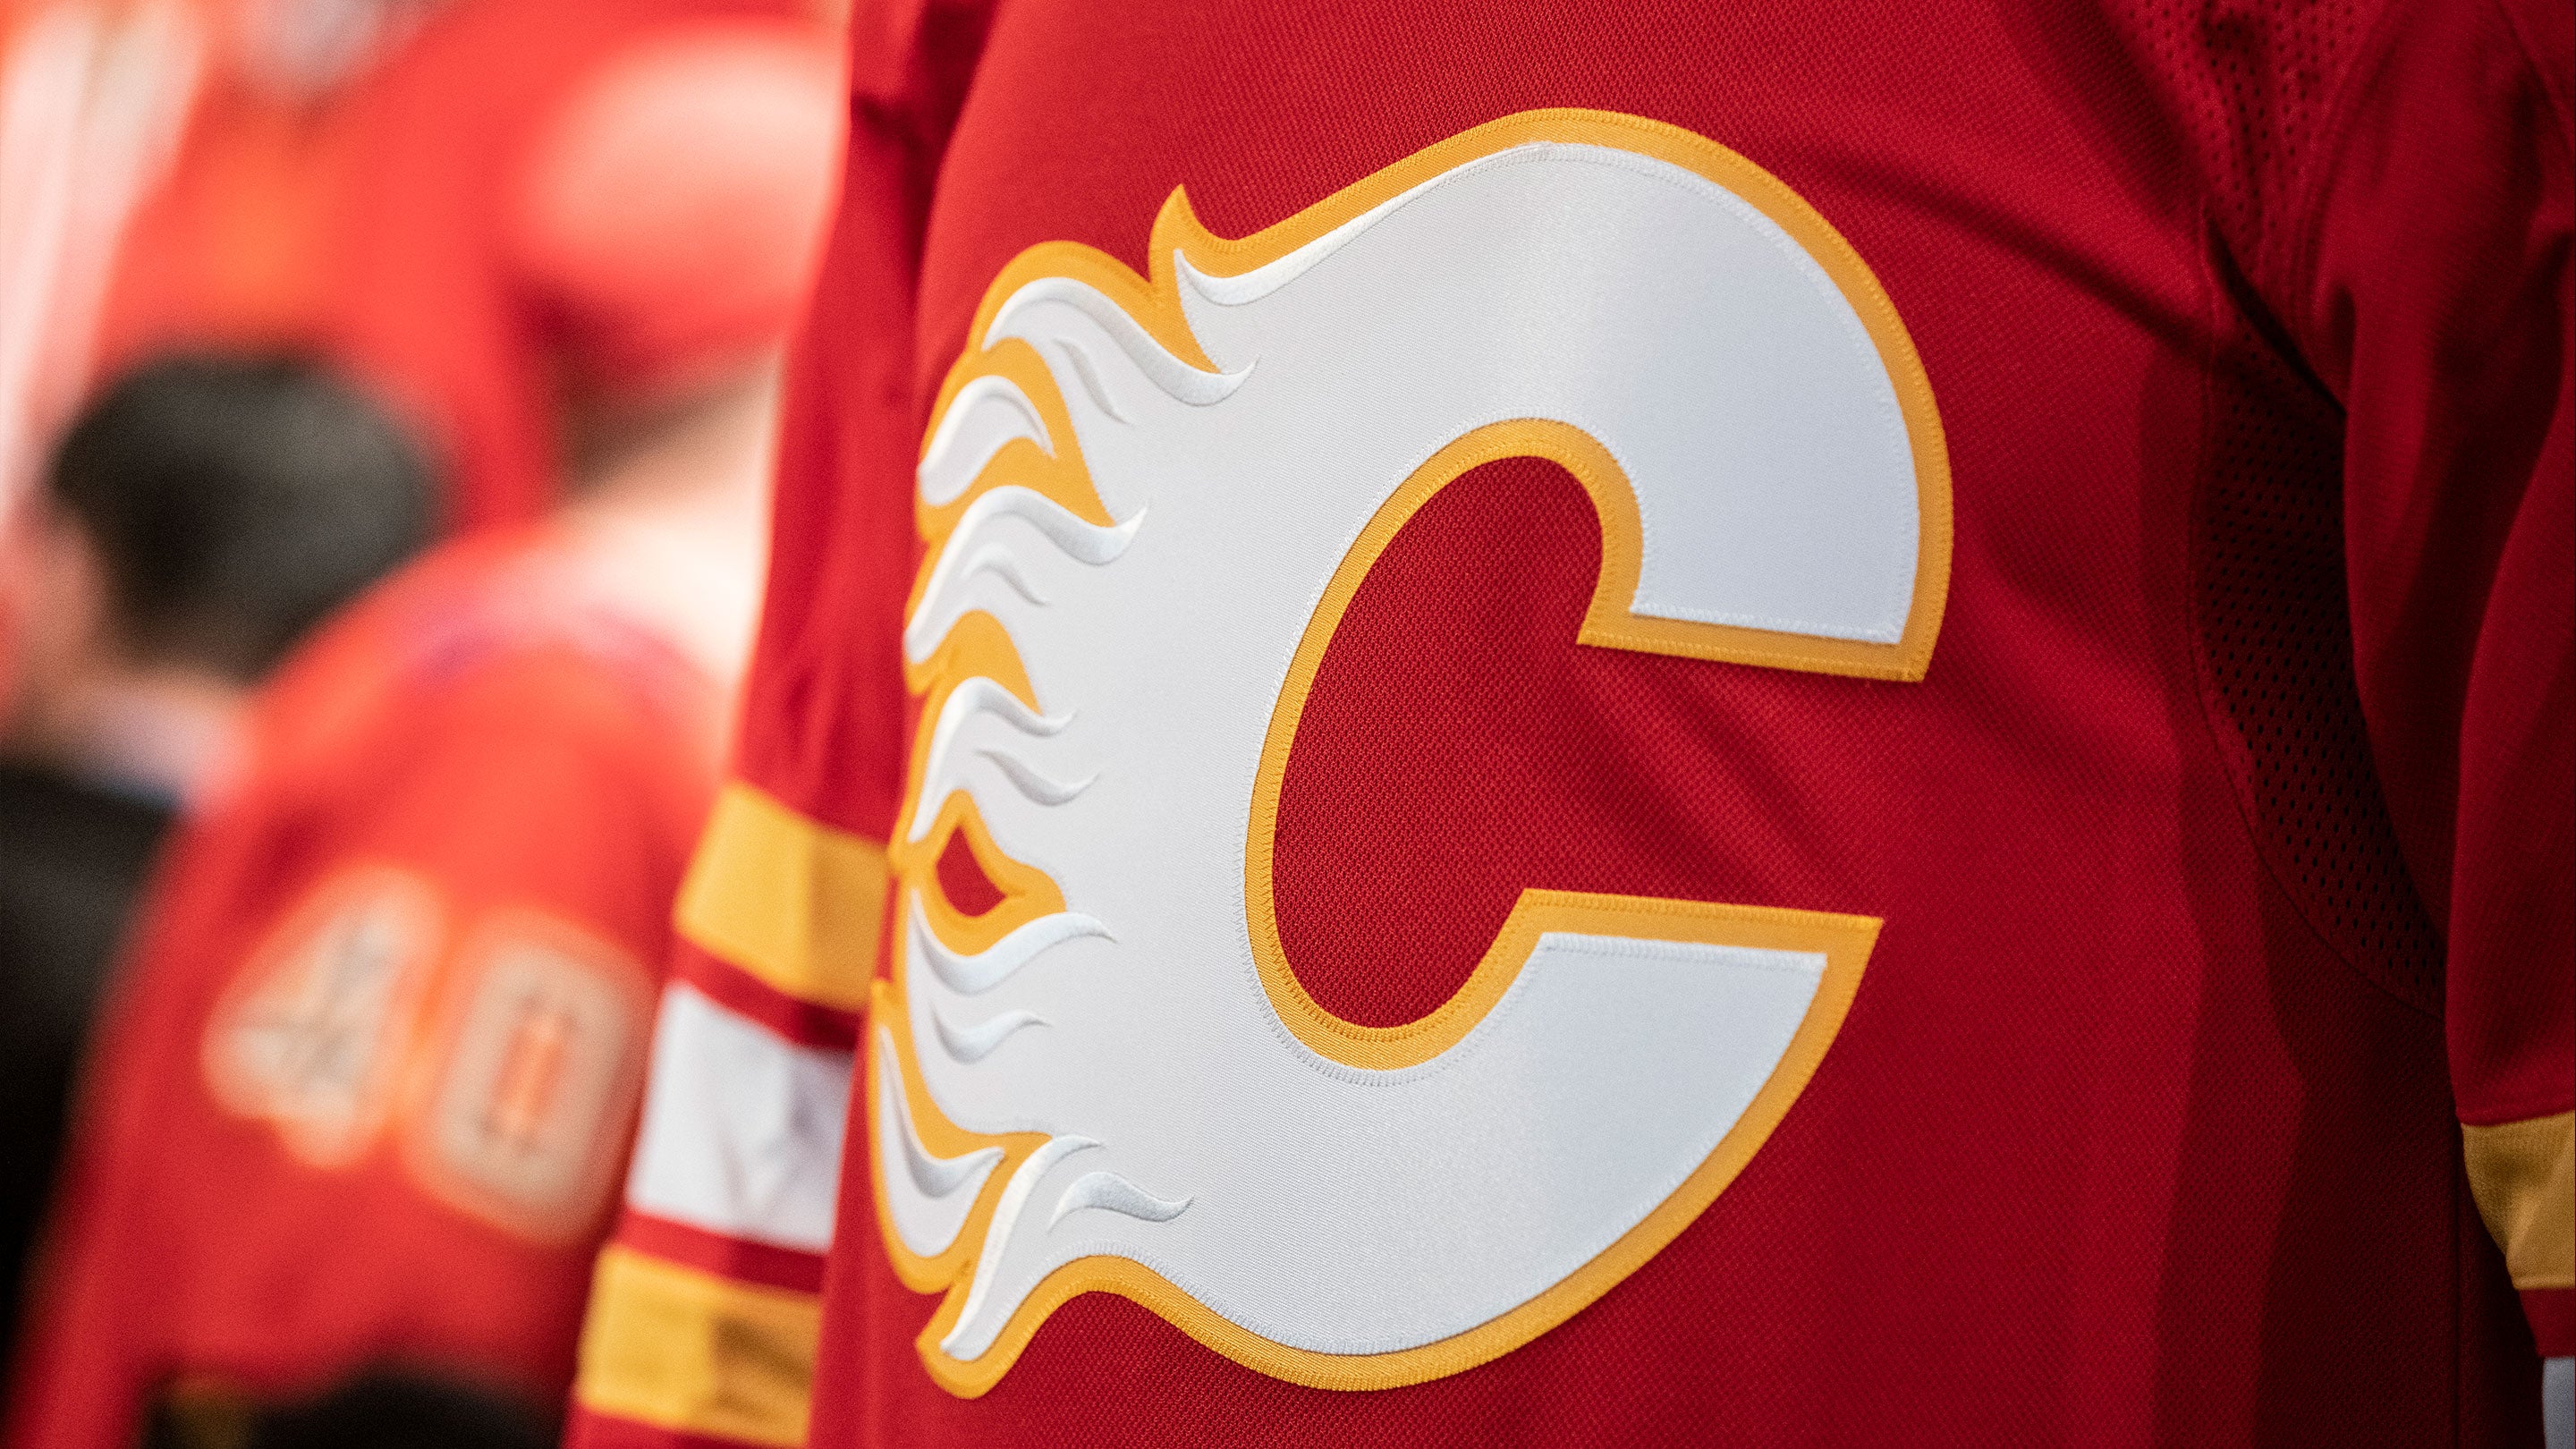 Calgary Flames - The Calgary Flames FanAttic Authentic Equipment